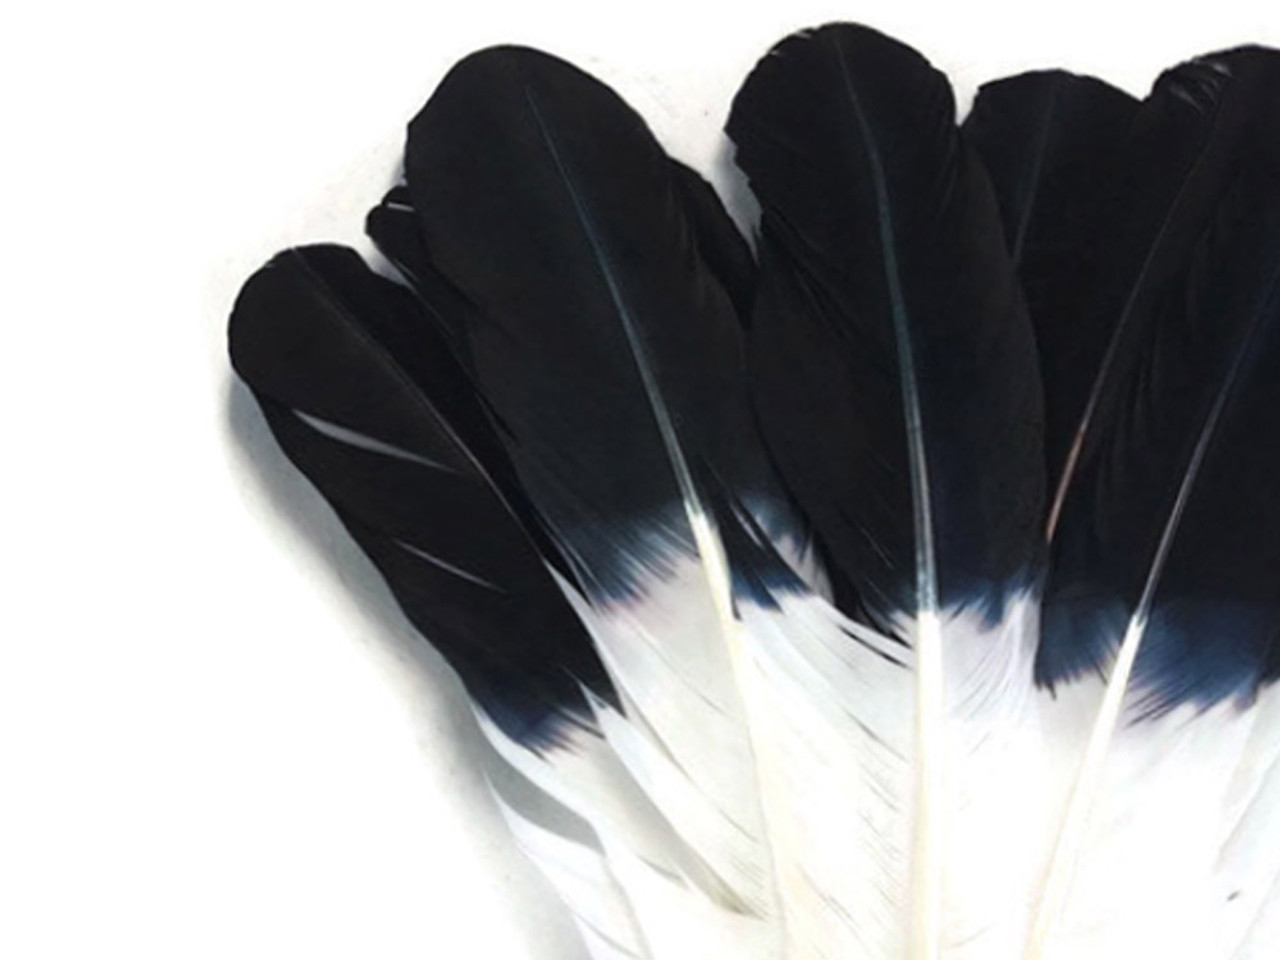 Wholesale Turkey Wing Feathers, 1/4 Lb White Turkey Rounds